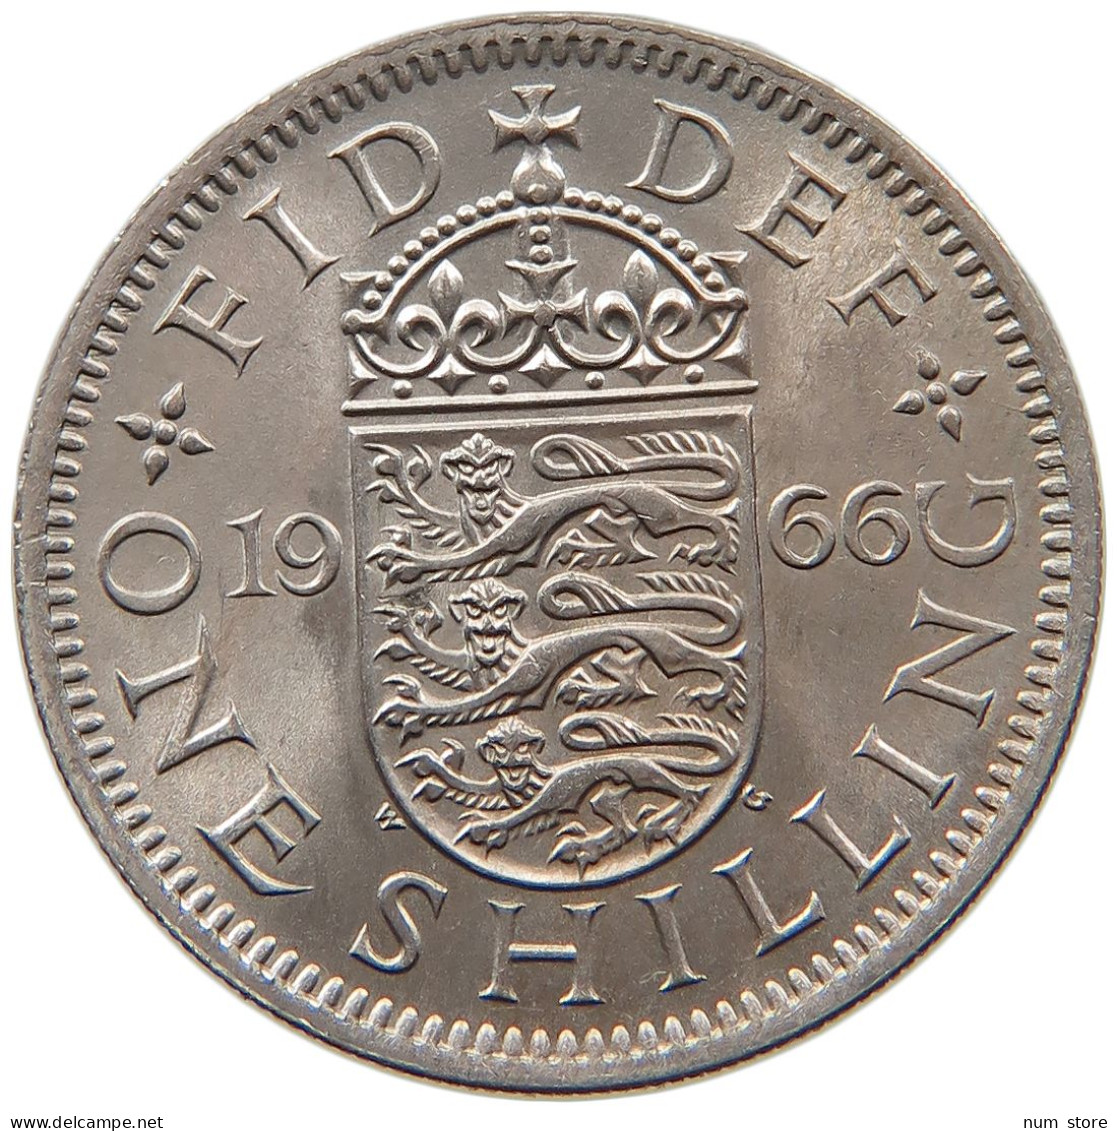 GREAT BRITAIN SHILLING 1966 #s095 0317 - I. 1 Shilling